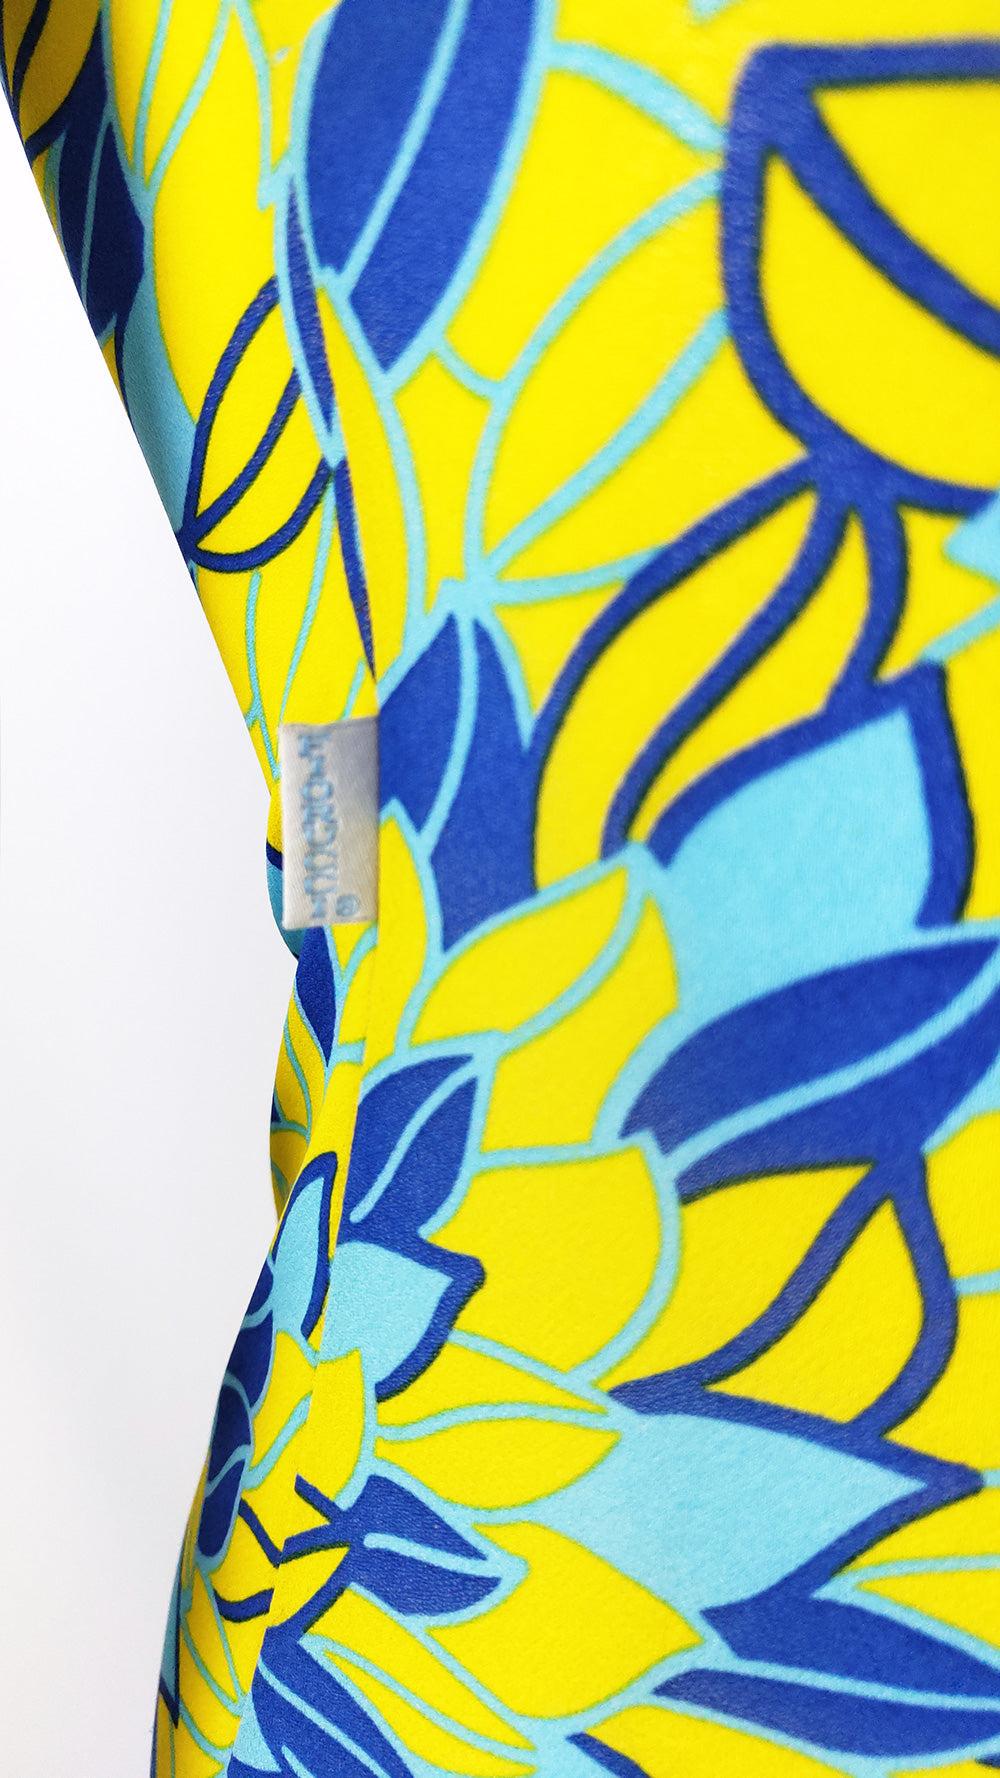 Fiorucci Vintage Womens Tropical Maxi Slip Dress